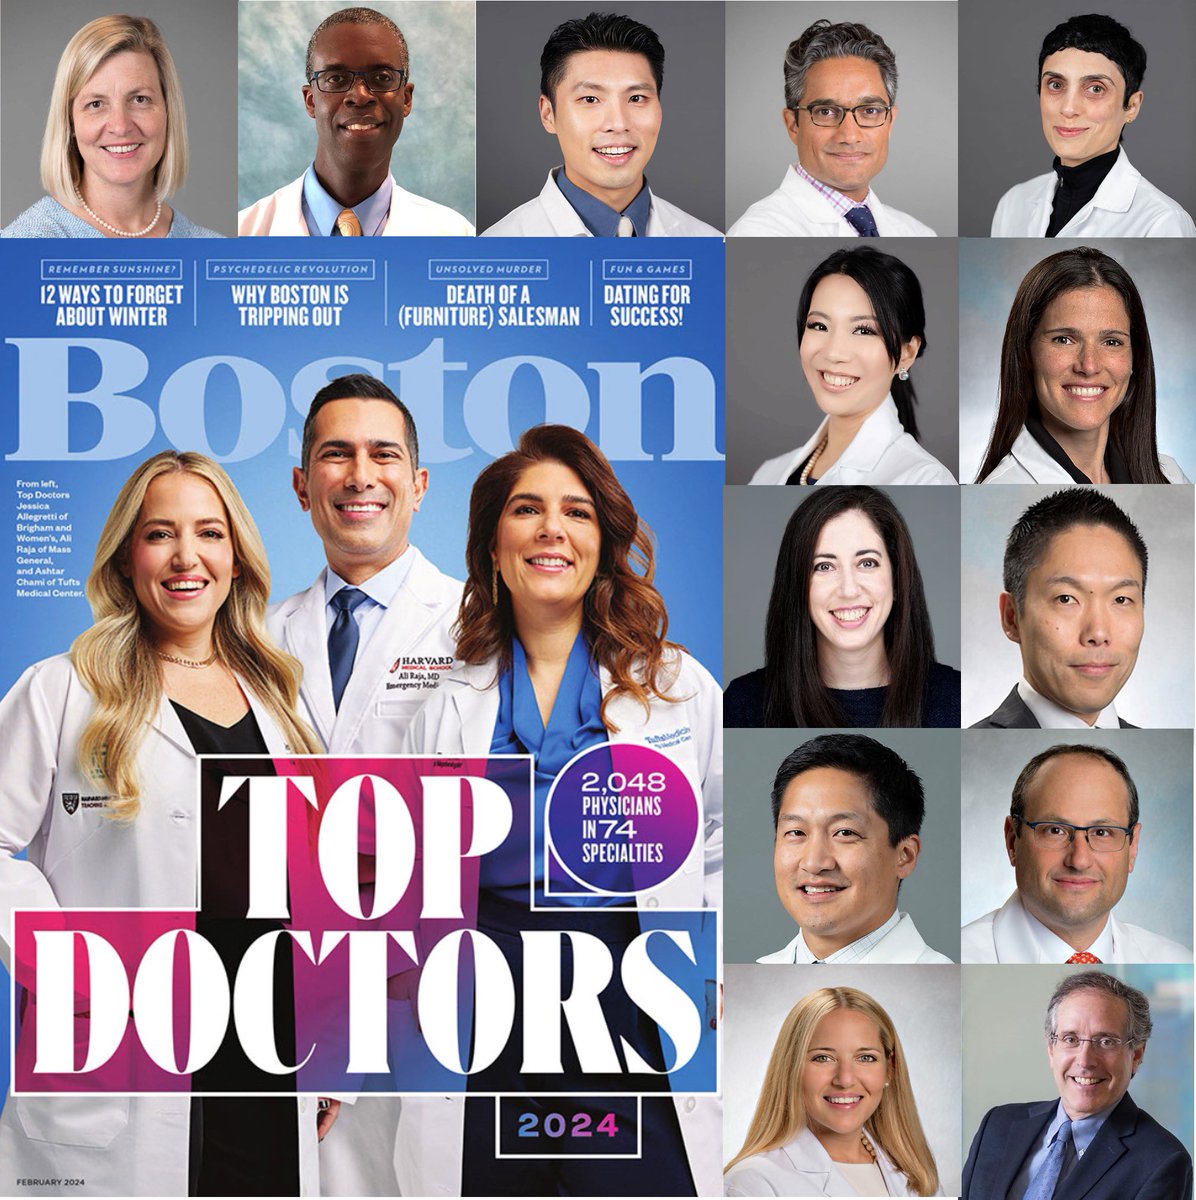 🎉 1️⃣3️⃣ #BrighamGIFaculty named @BostonMagazine Top Doctors! 🥼Hiroyuki Aihara 🥼Jessica Allegretti 🥼Walter Chan 🥼Alison Goldin 🥼Nikroo Hashemi 🥼Kunal Jajoo 🥼Pichamol Jirapinyo 🥼Josh Korzenik 🥼Muthoka Mutinga 🥼Anna Rutherford 🥼Marvin Ryou 🥼John Saltzman 🥼Rachel Winter